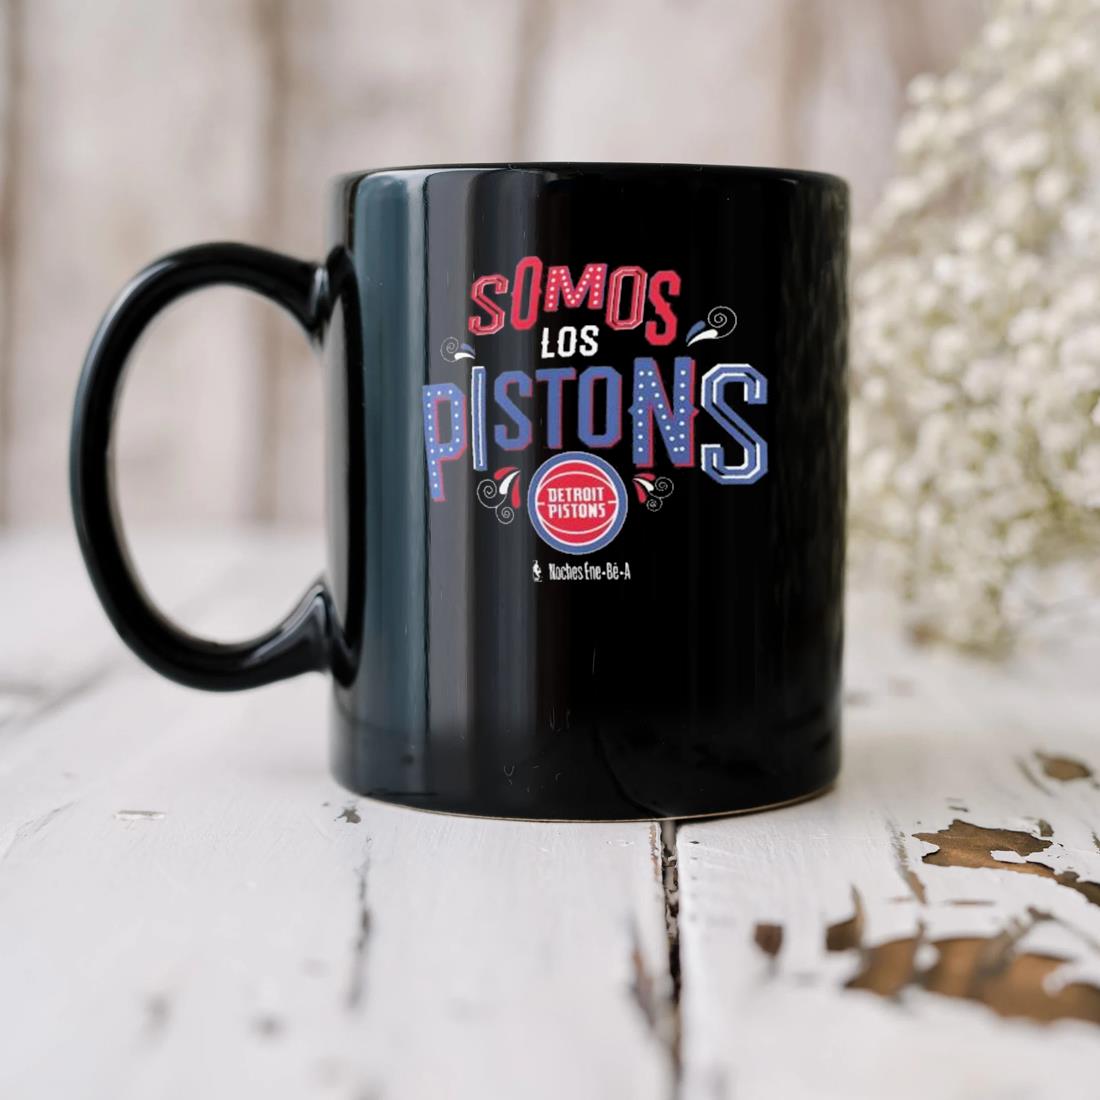 Somos Los Detroit Pistons Noches Ene-be-a Mug